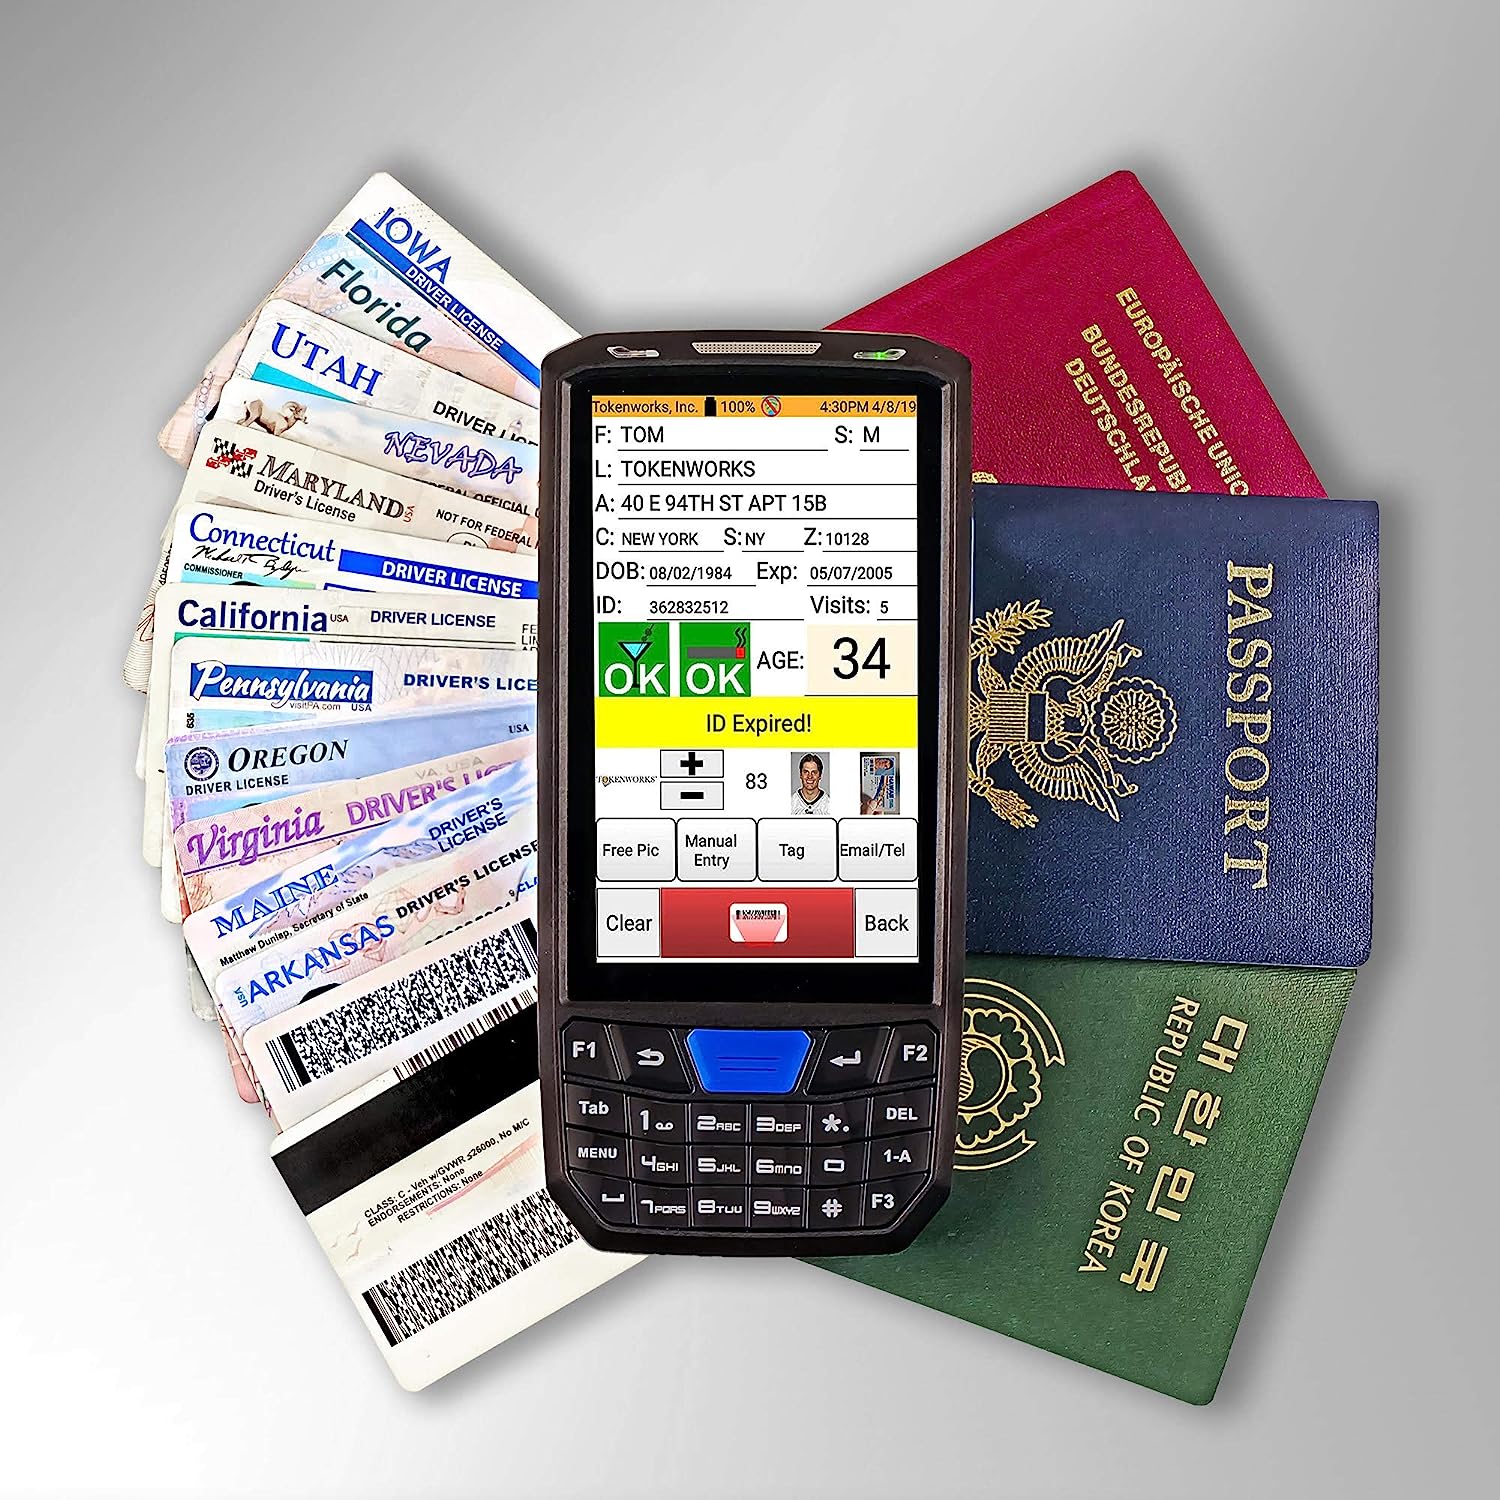 IDVisor Smart V2 ID Scanner - Drivers License and Passport Age Verification & Customer Management + Charger Cradle, Hand Strap & More.